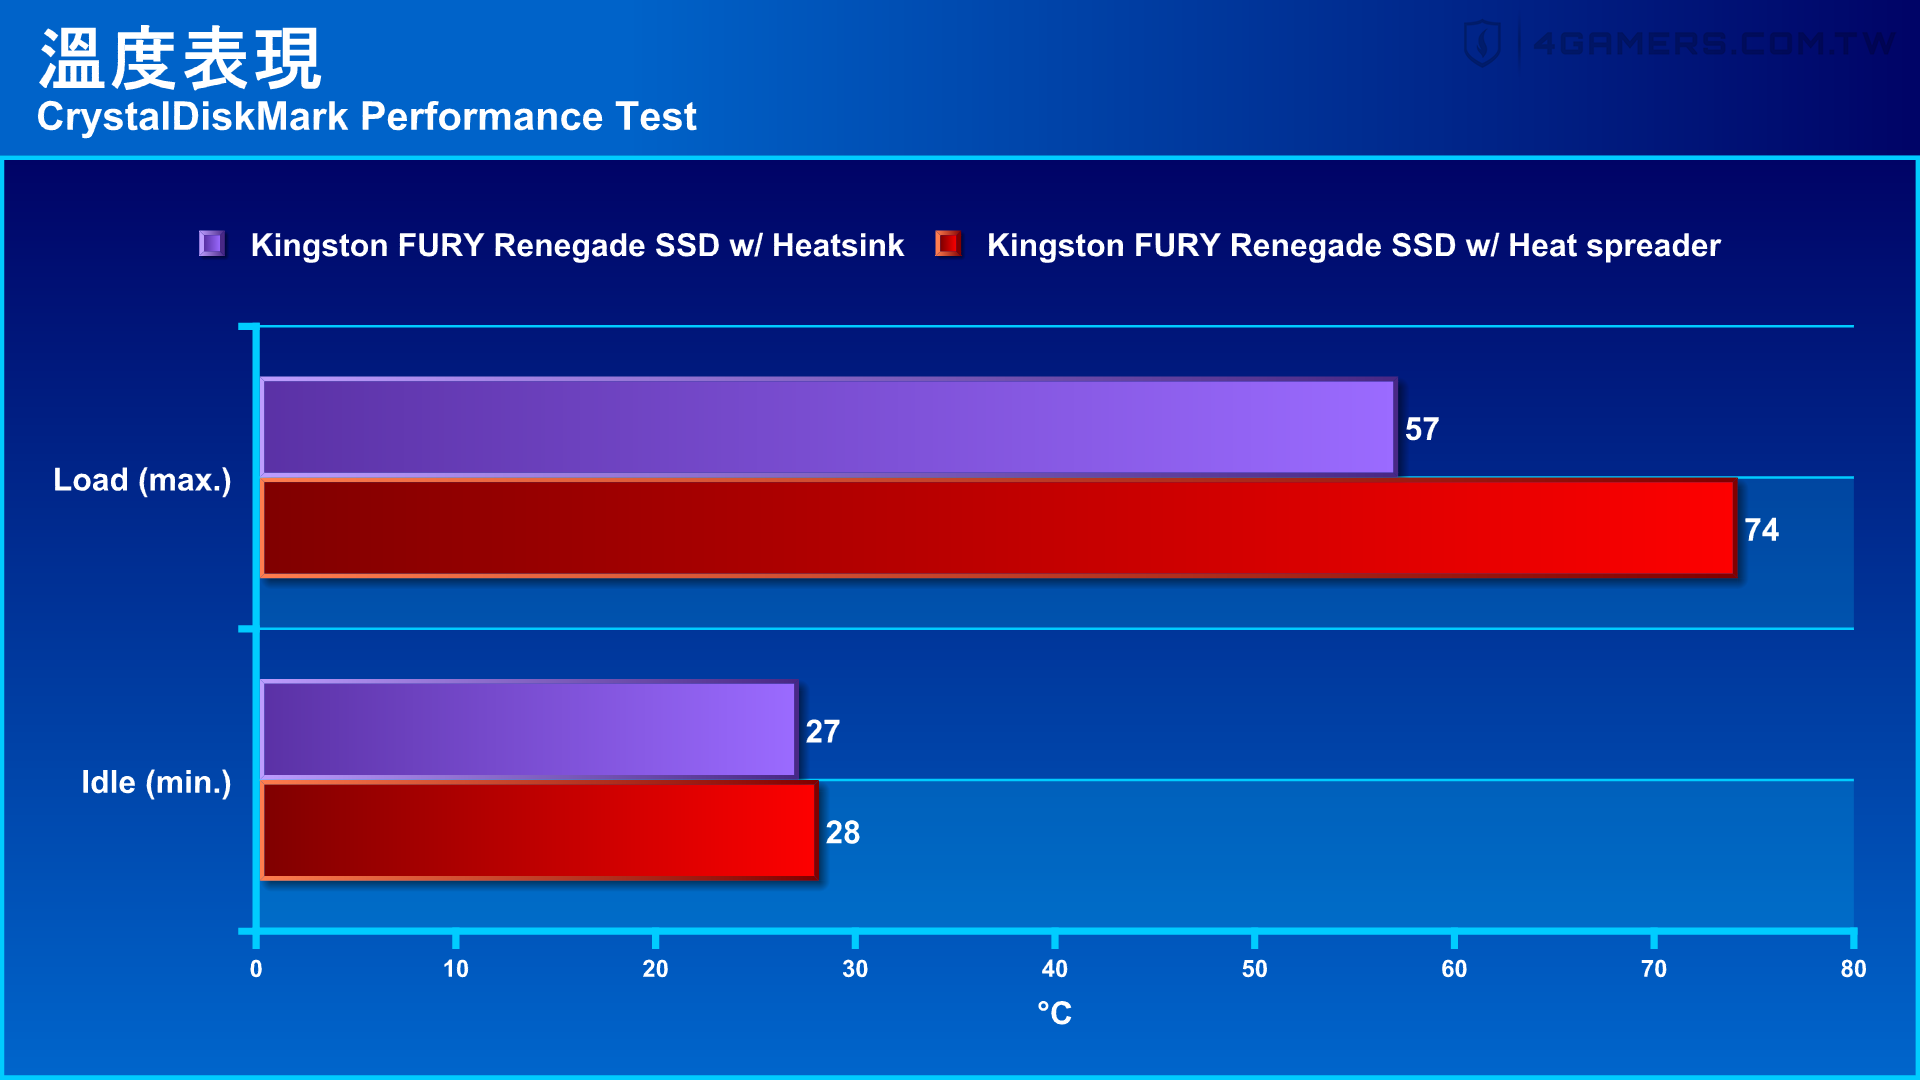 Kingston FURY Renegade PCIe 4.0 NVMe M.2 SSD with Heatsink